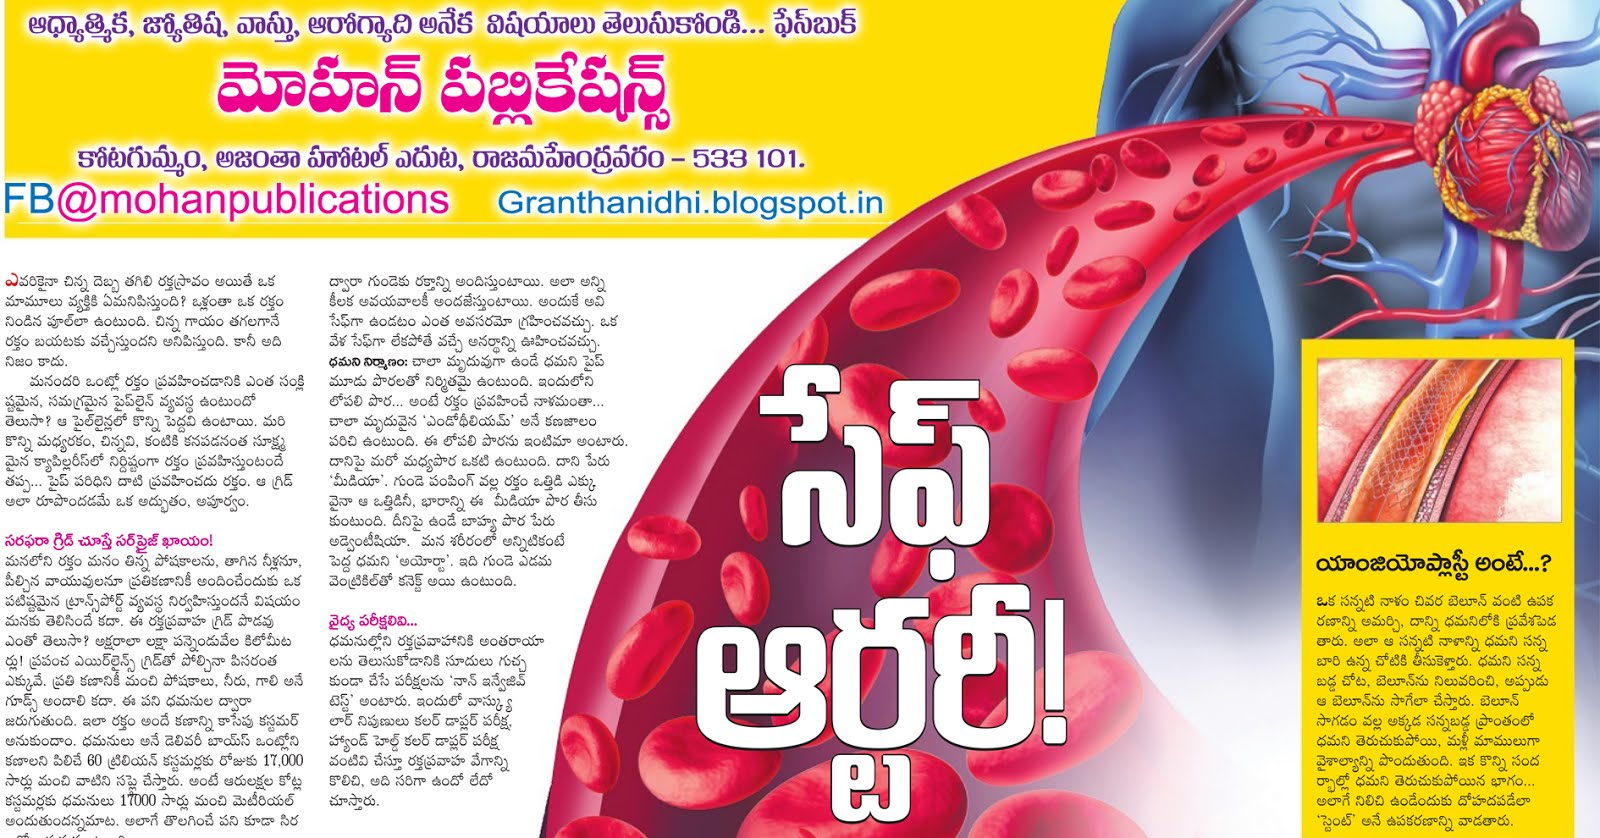 manidweepa varnana in telugu pdf free